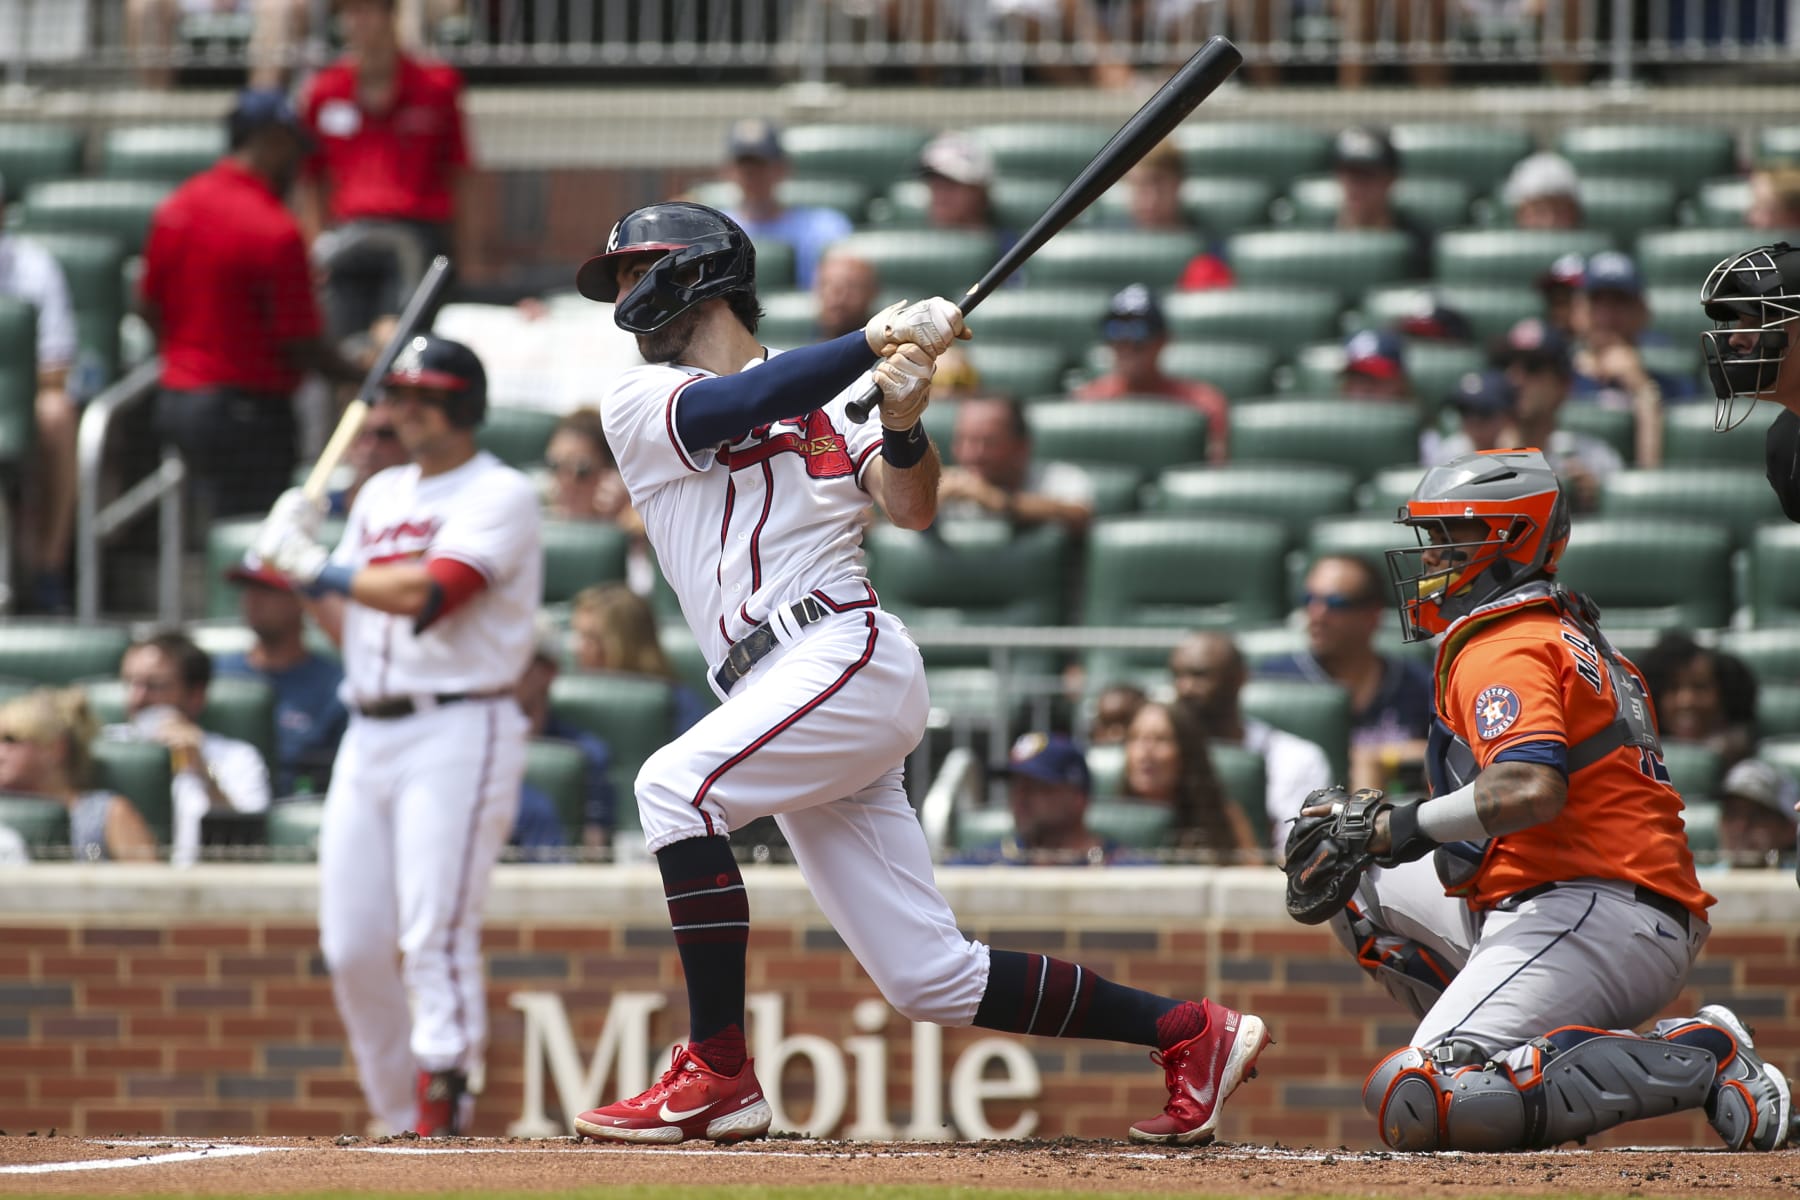 Freddie Freeman reflects on Braves' World Series win: 'I'm lost